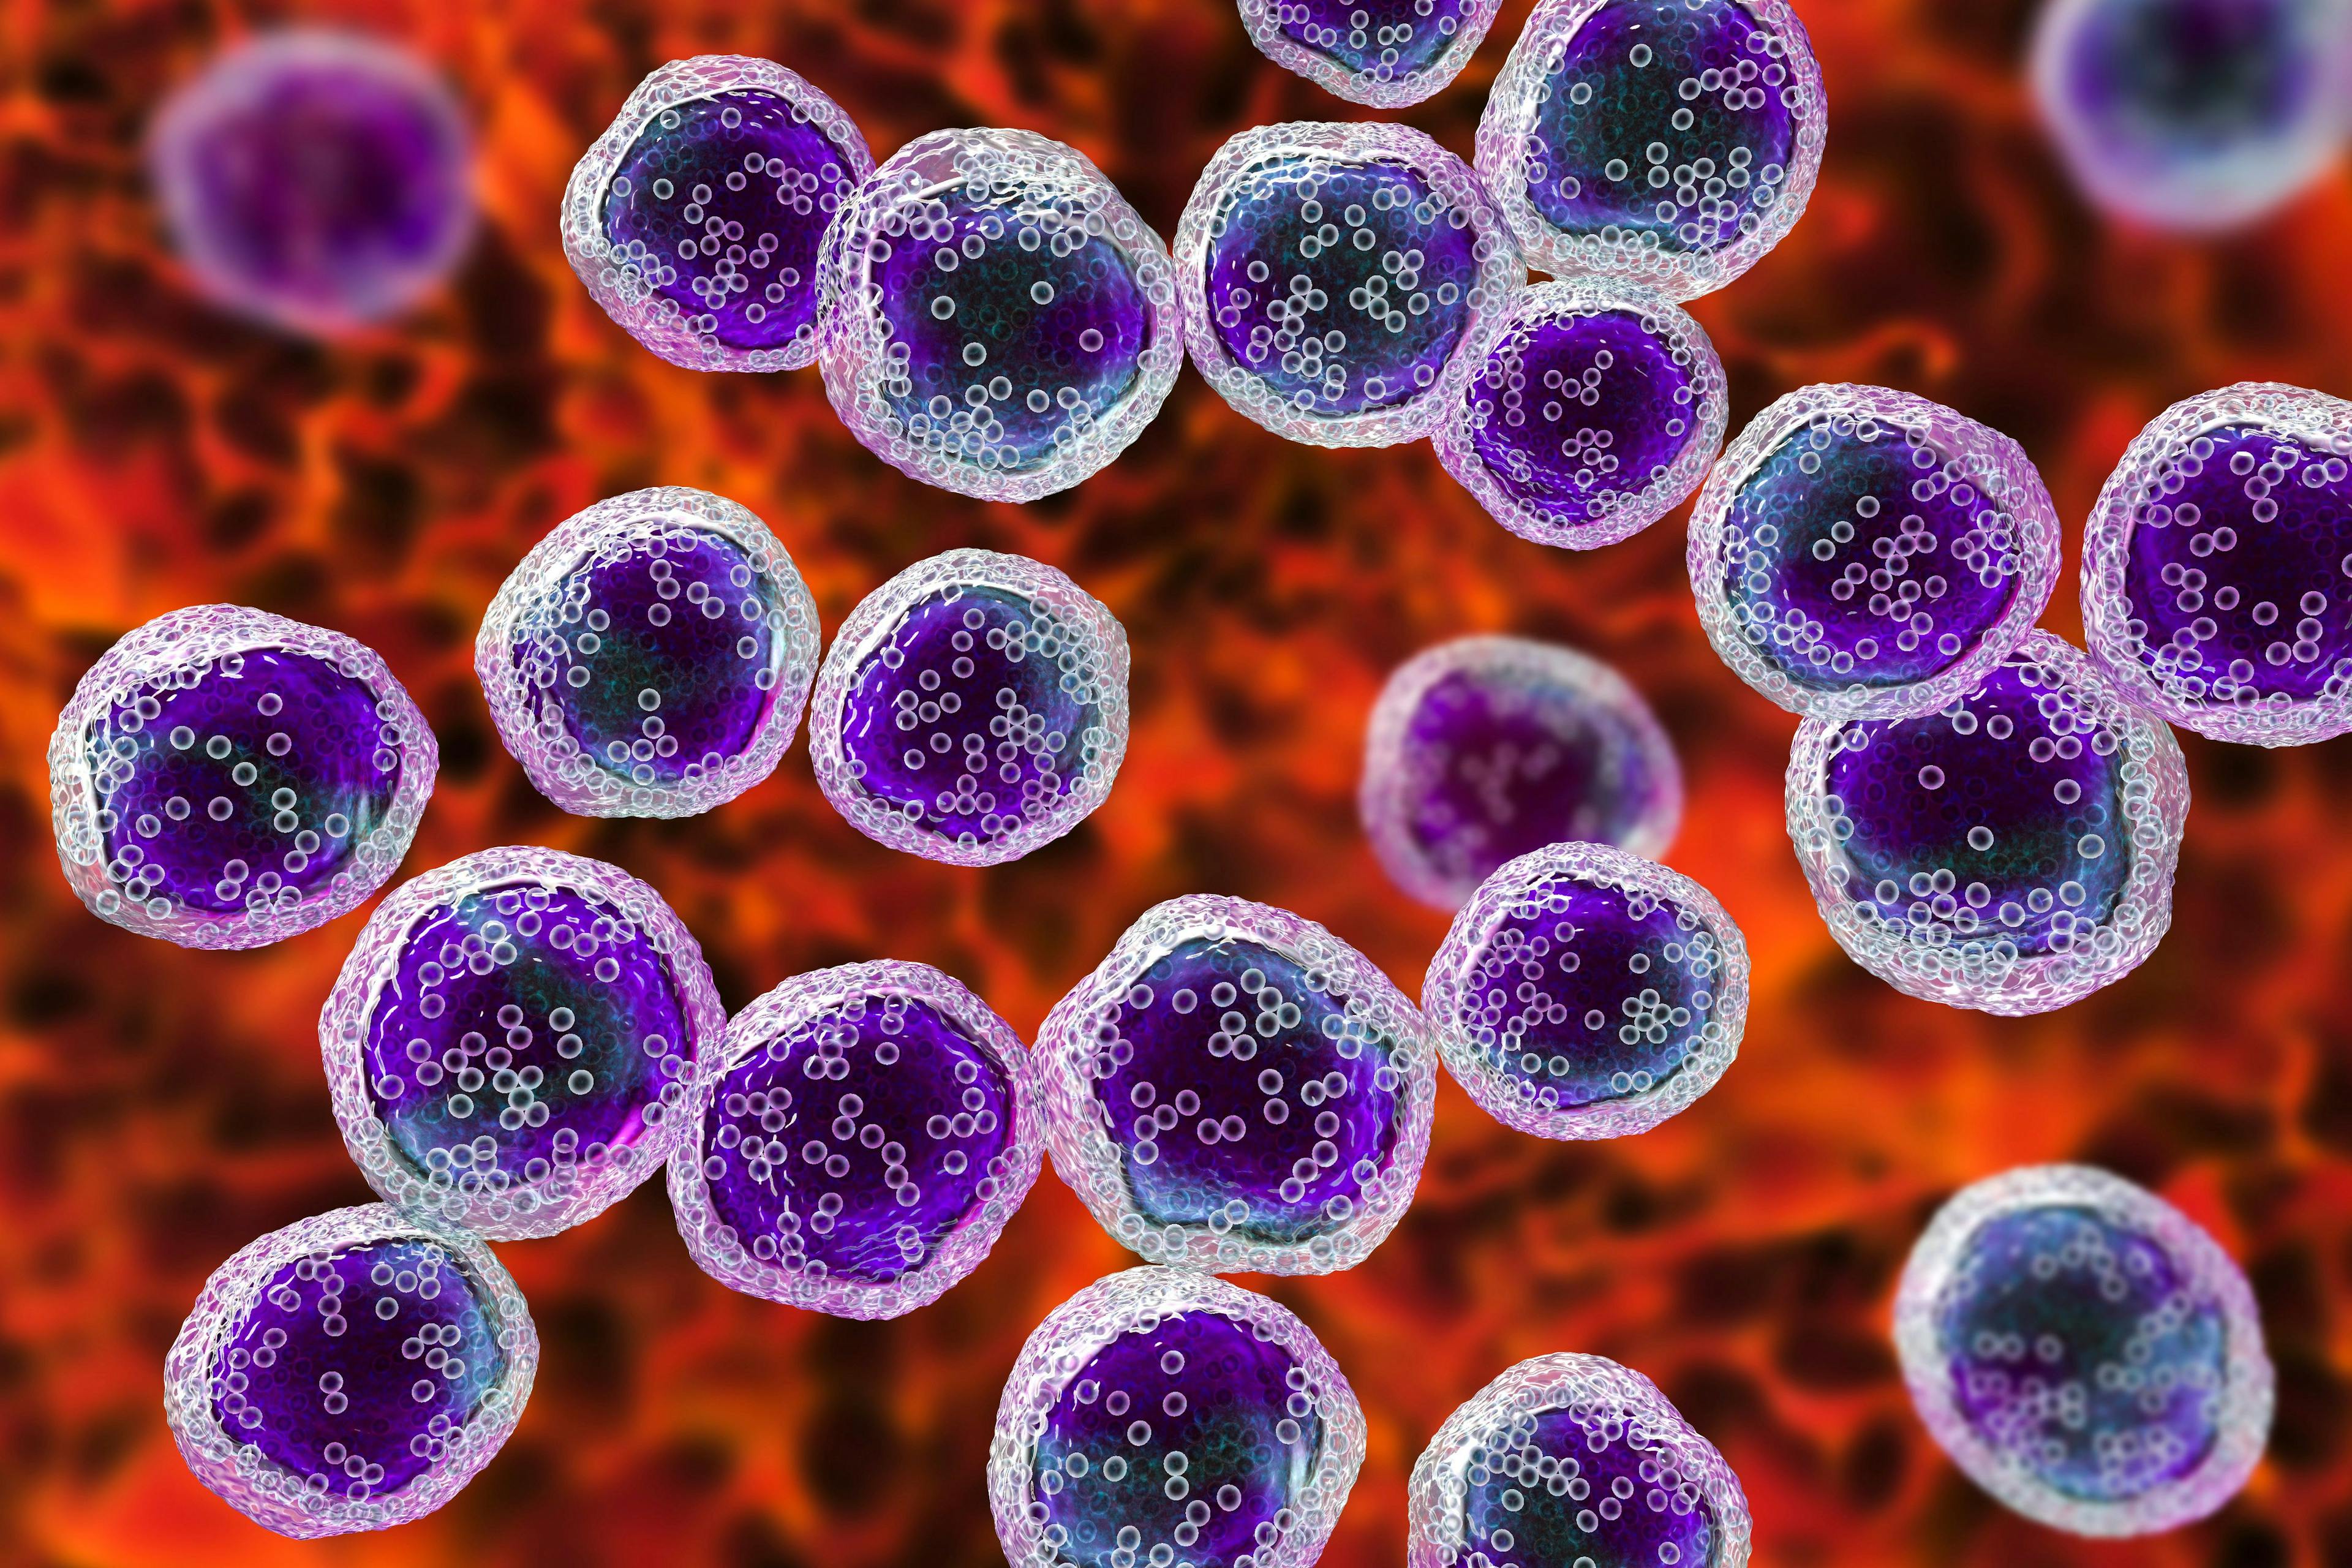 Illustration of lymphoma cells : © Dr_Microbe - stock.adobe.com